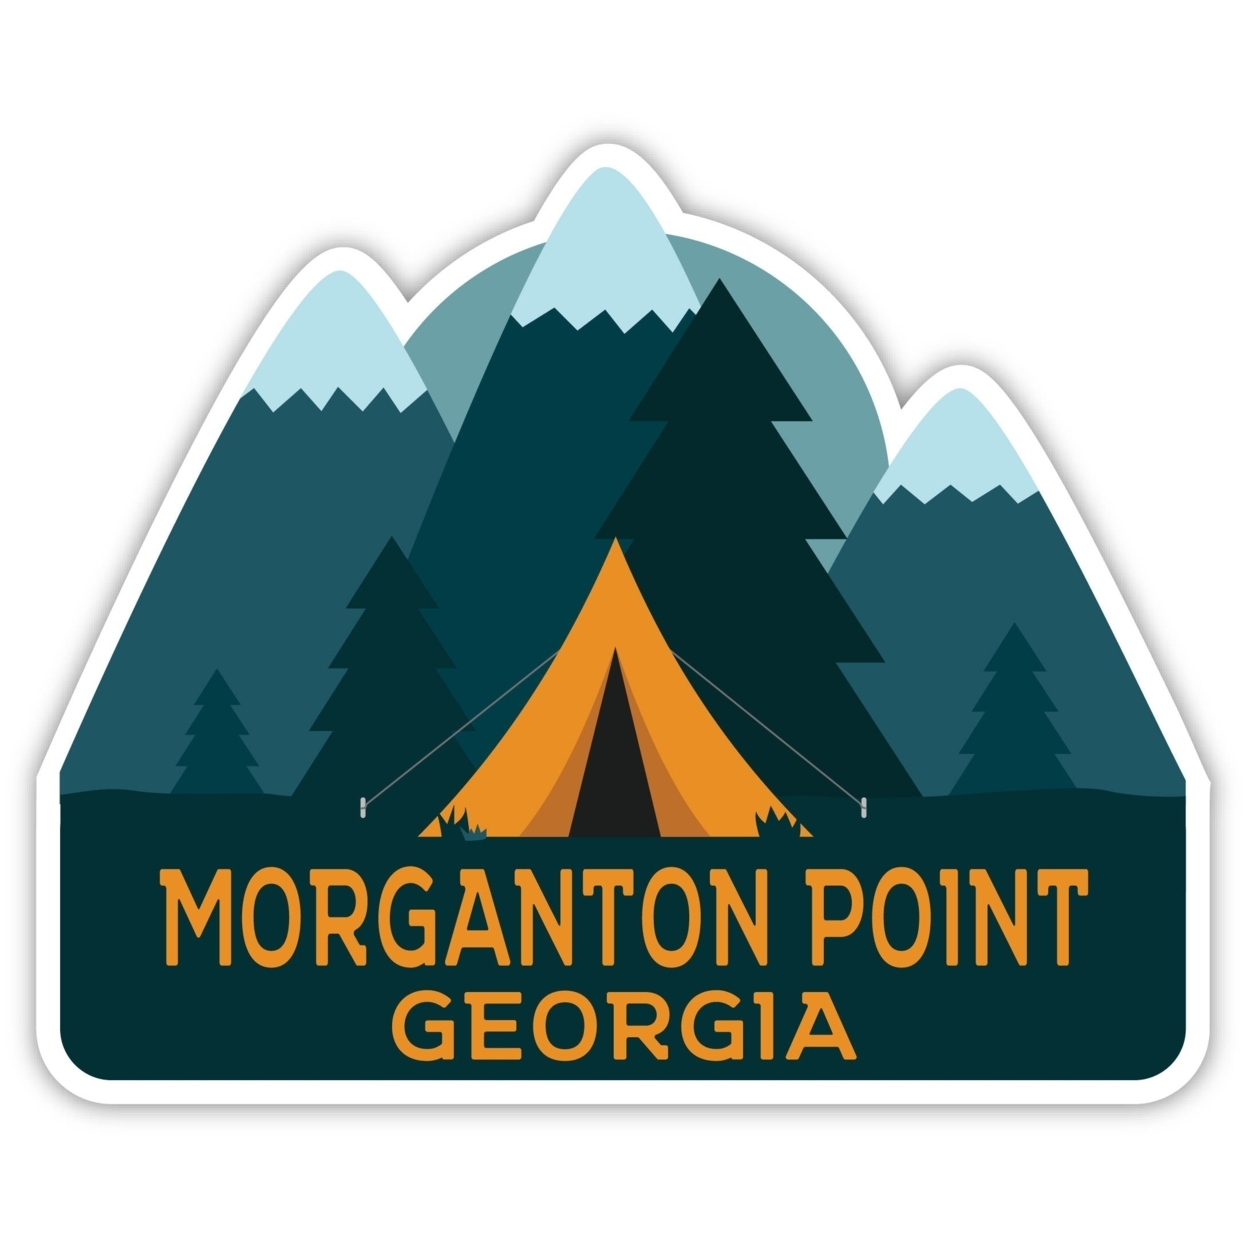 Morganton Point Georgia Souvenir Decorative Stickers (Choose Theme And Size) - Single Unit, 4-Inch, Tent